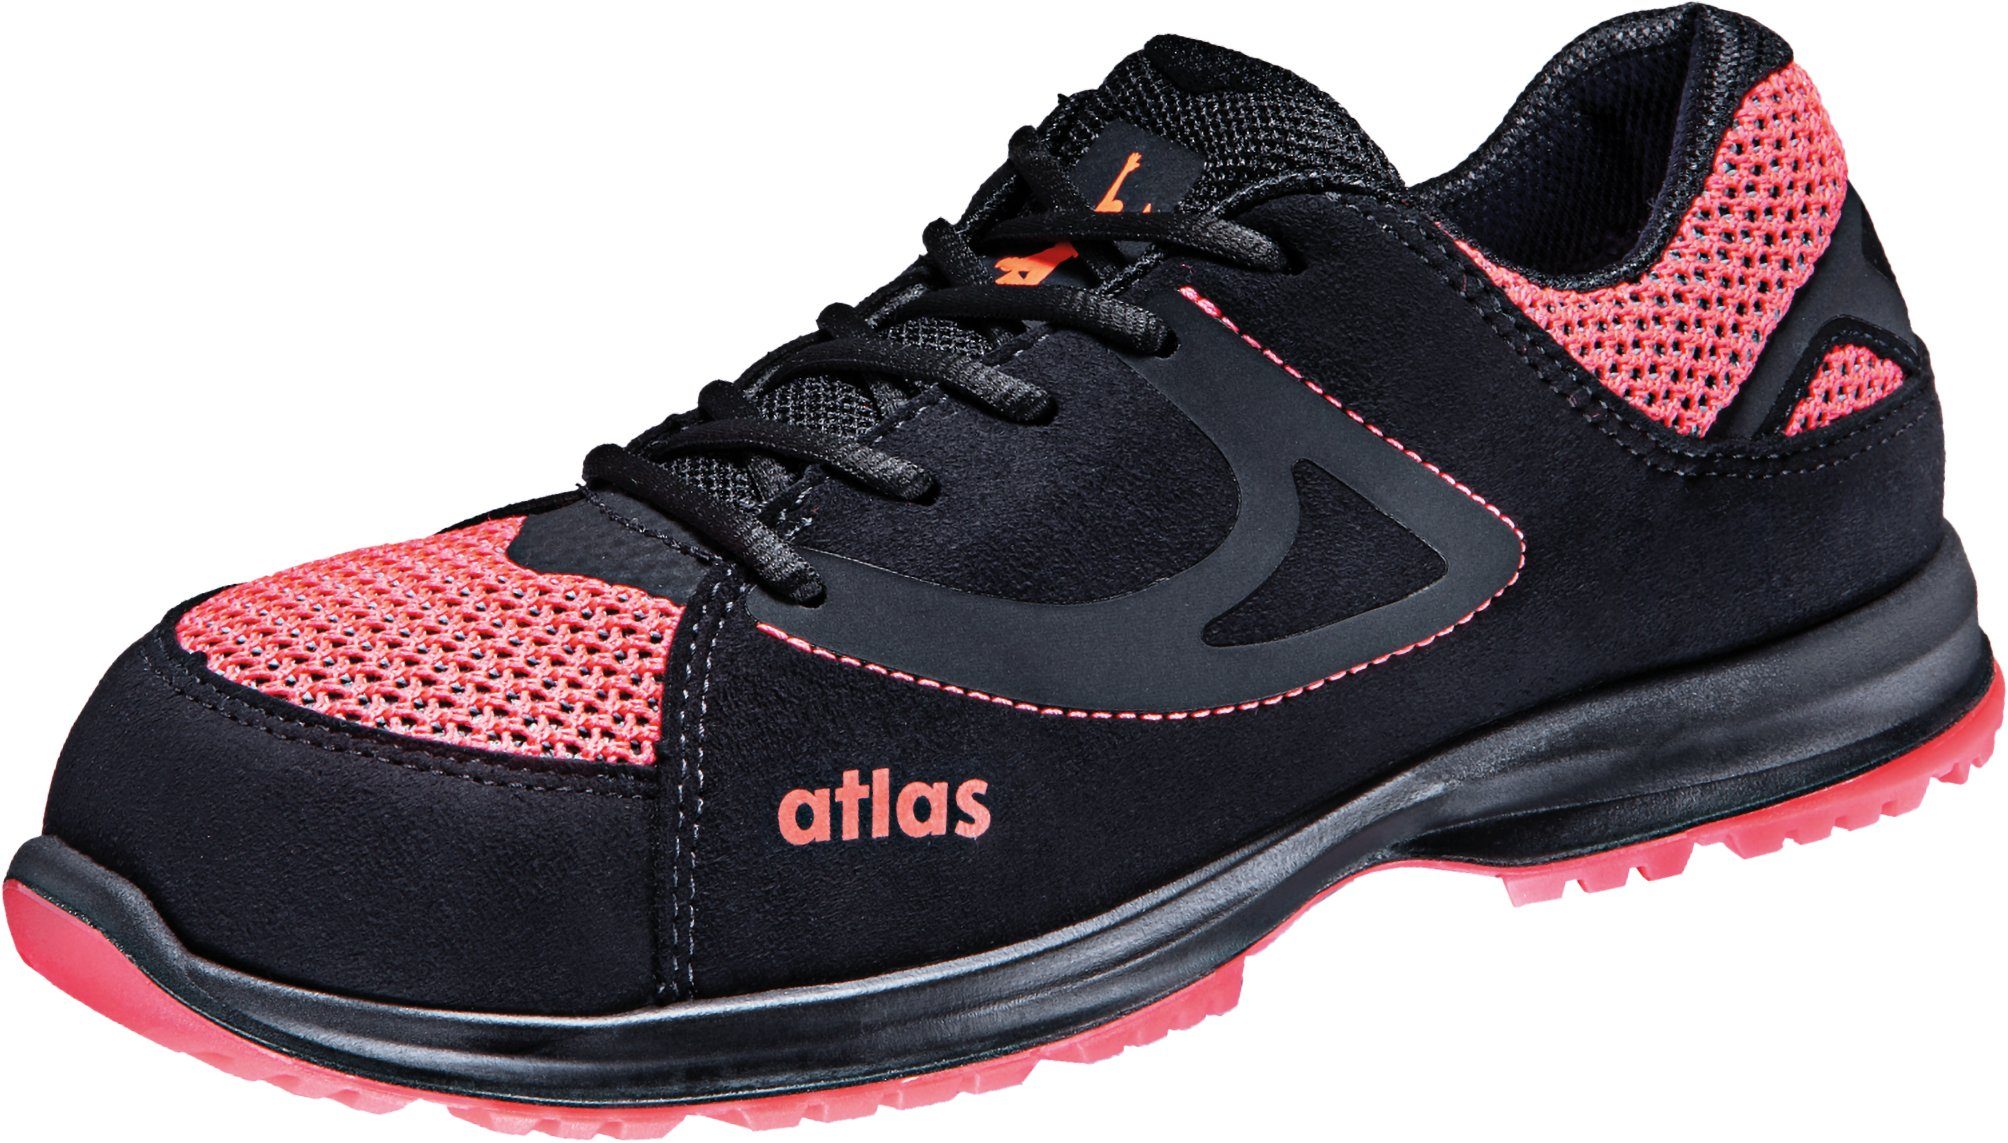 Atlas Schuhe GX 200 black EN20345 S1 ESD Sicherheitsschuh